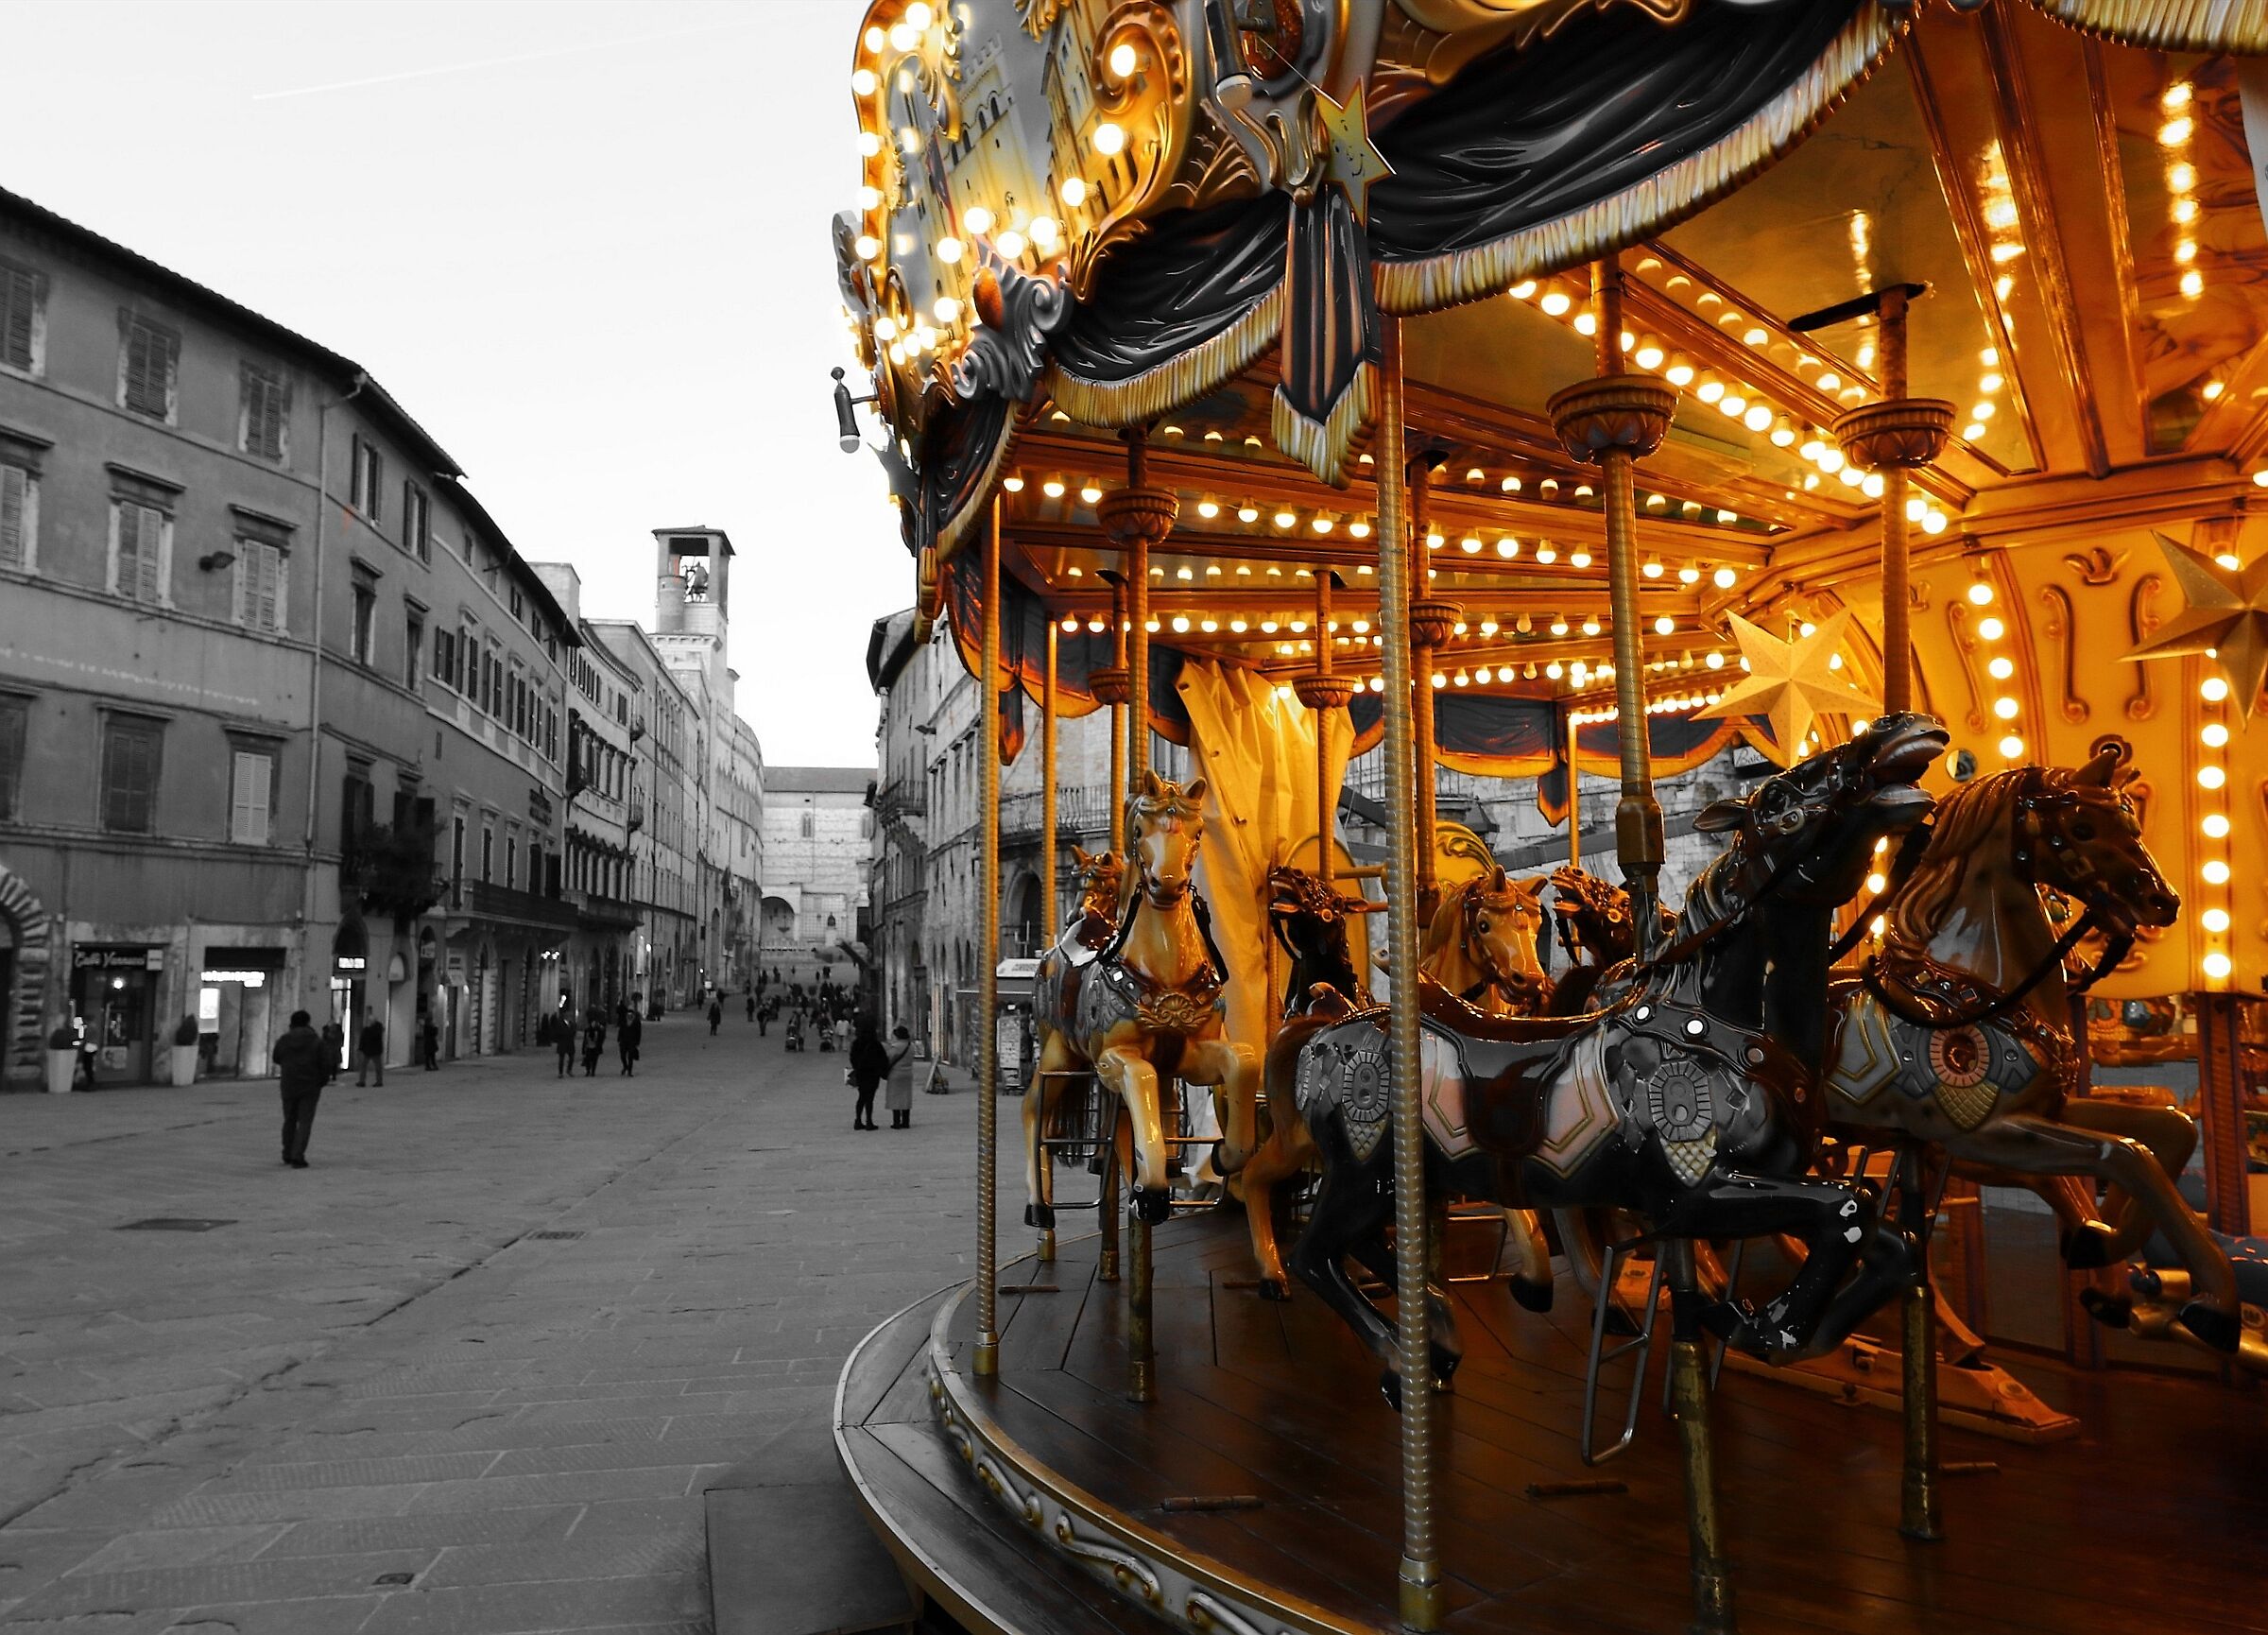 Carousel in Perugia...